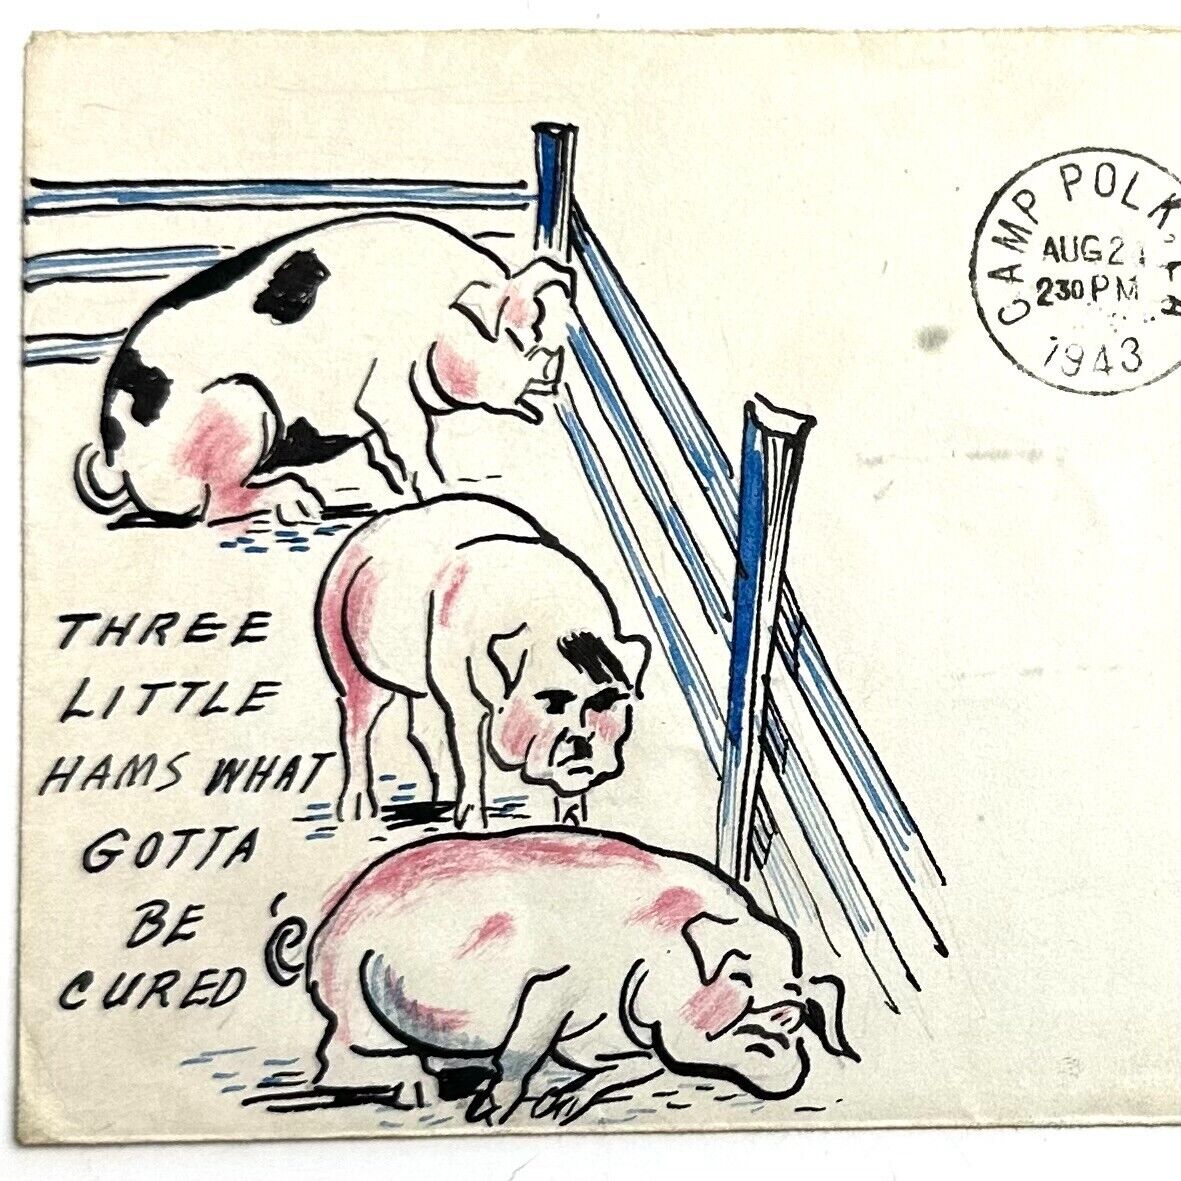 1943 World War 2 Illustrated Envelope Three Little Hams What Gotta Be Cured